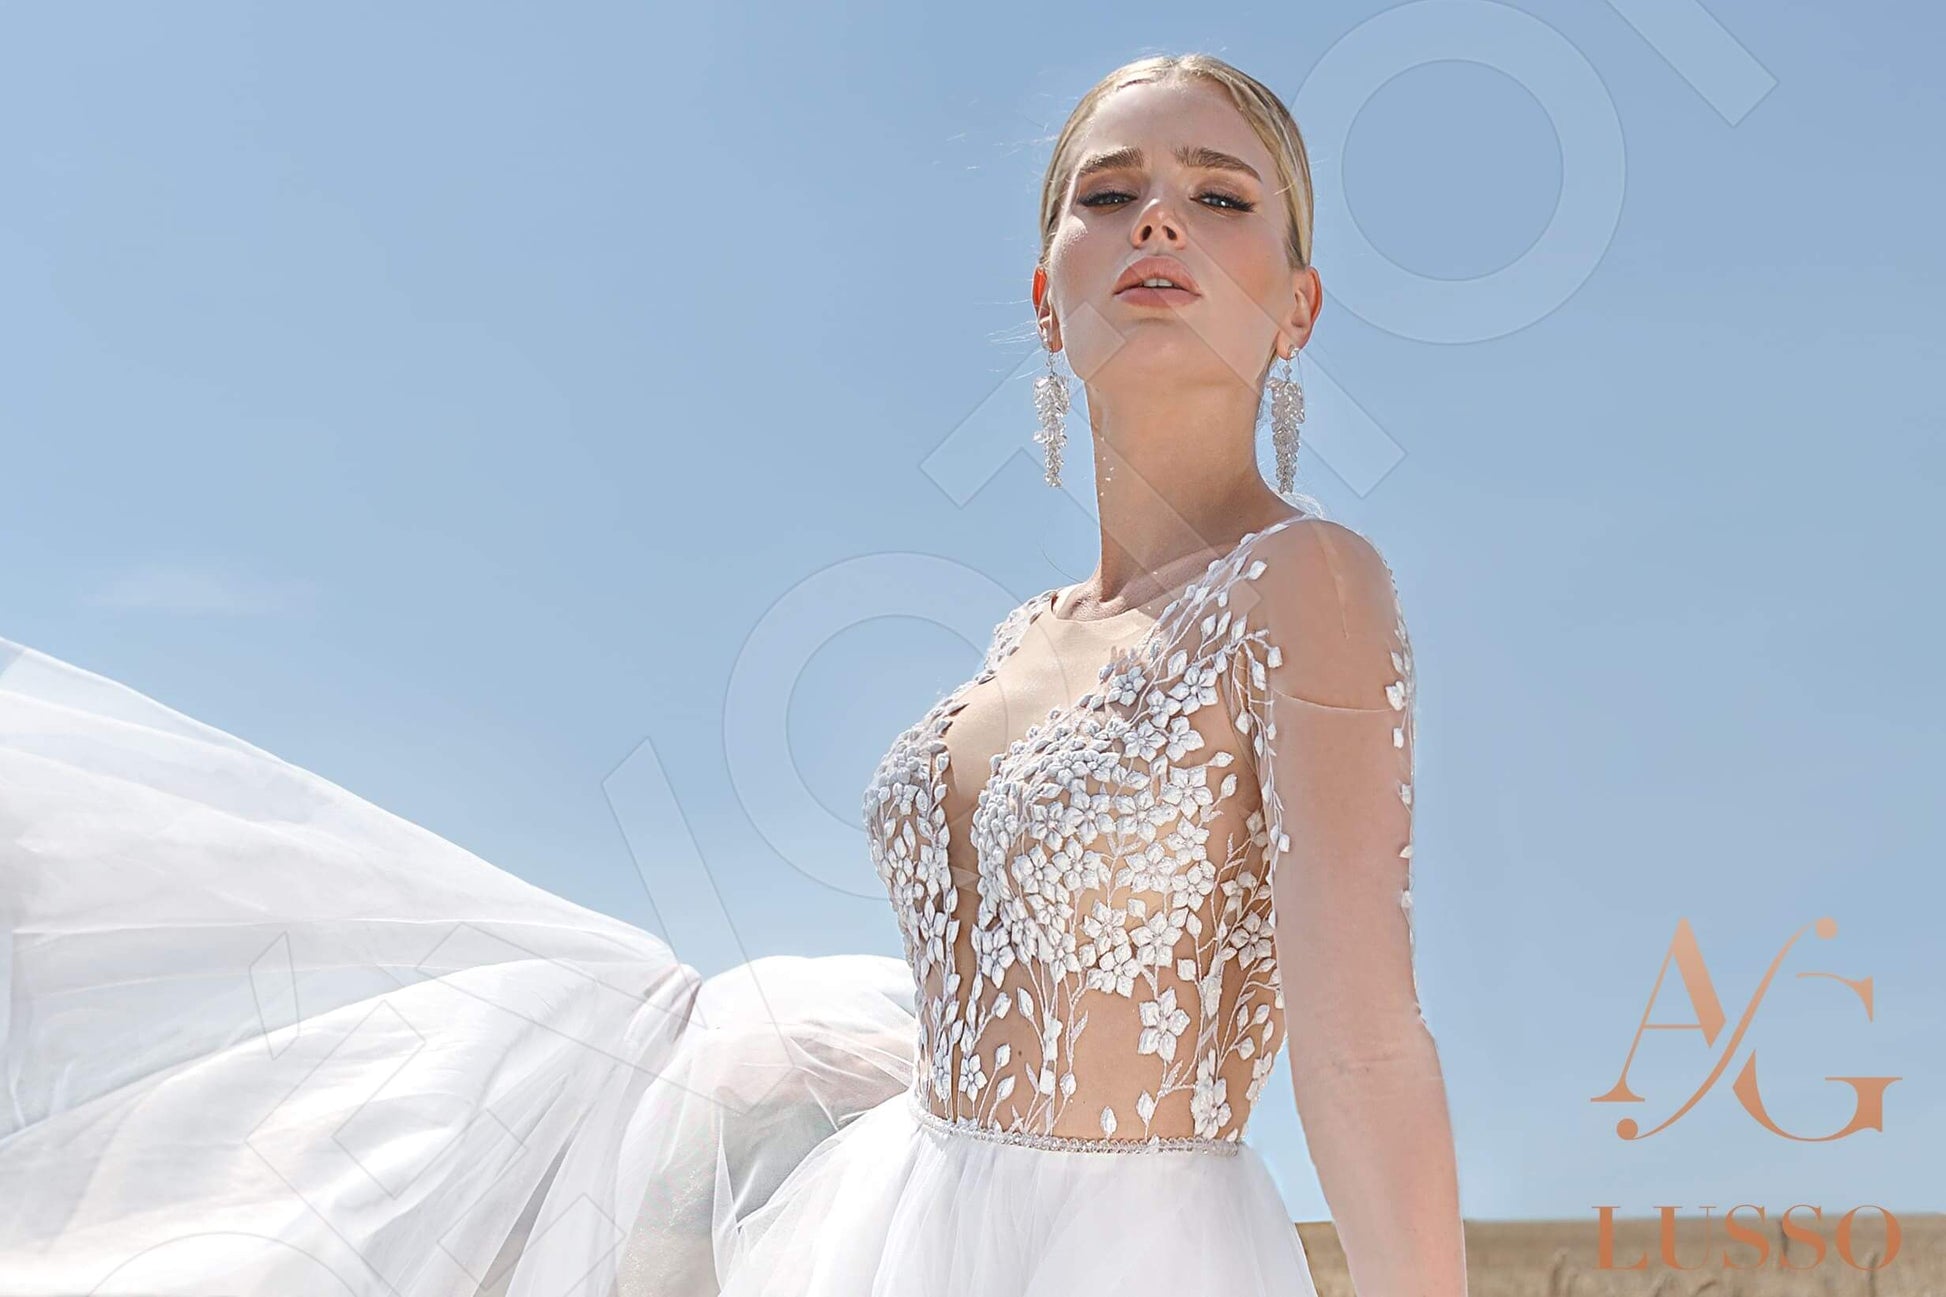 Aubrey A-line Illusion Ivory Wedding dress